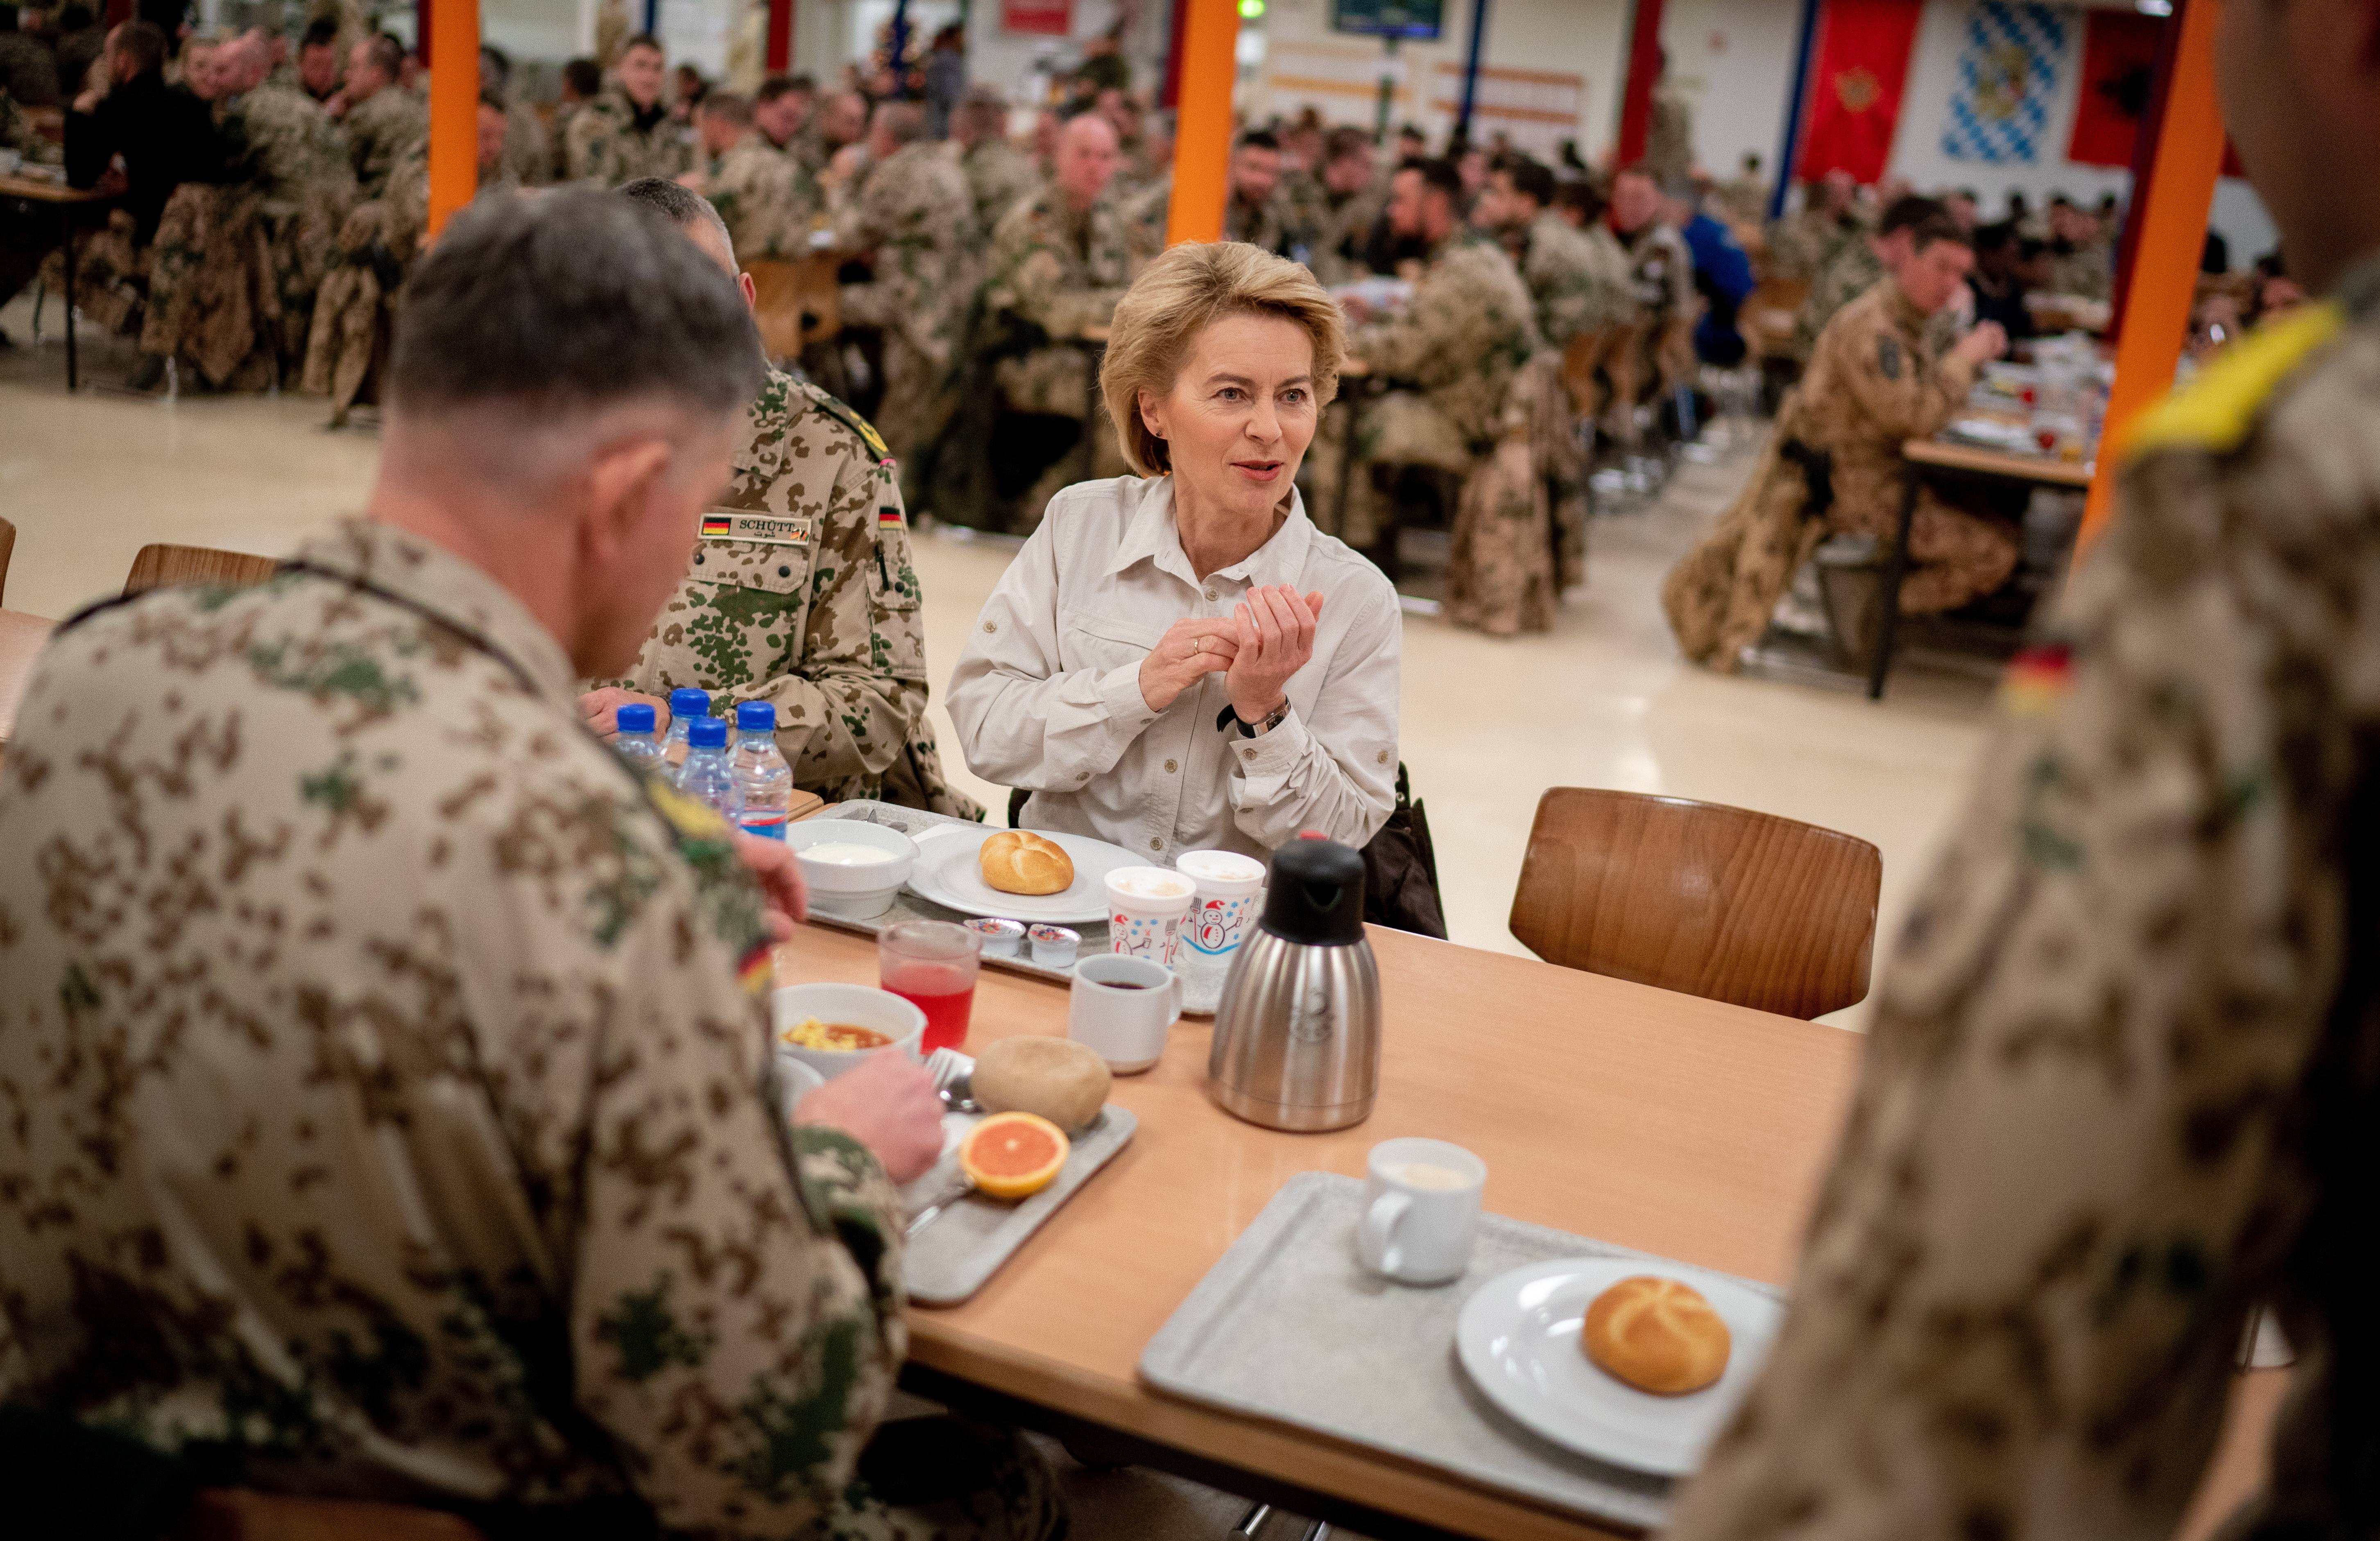 German Defence Minister Ursula von der Leyen has breakfast with German soldiers during her visit on December 18, 2018 at Camp Marmal in Mazar-i-Sharif, Afghanistan. (Photo by Kay Nietfeld / POOL / AFP)